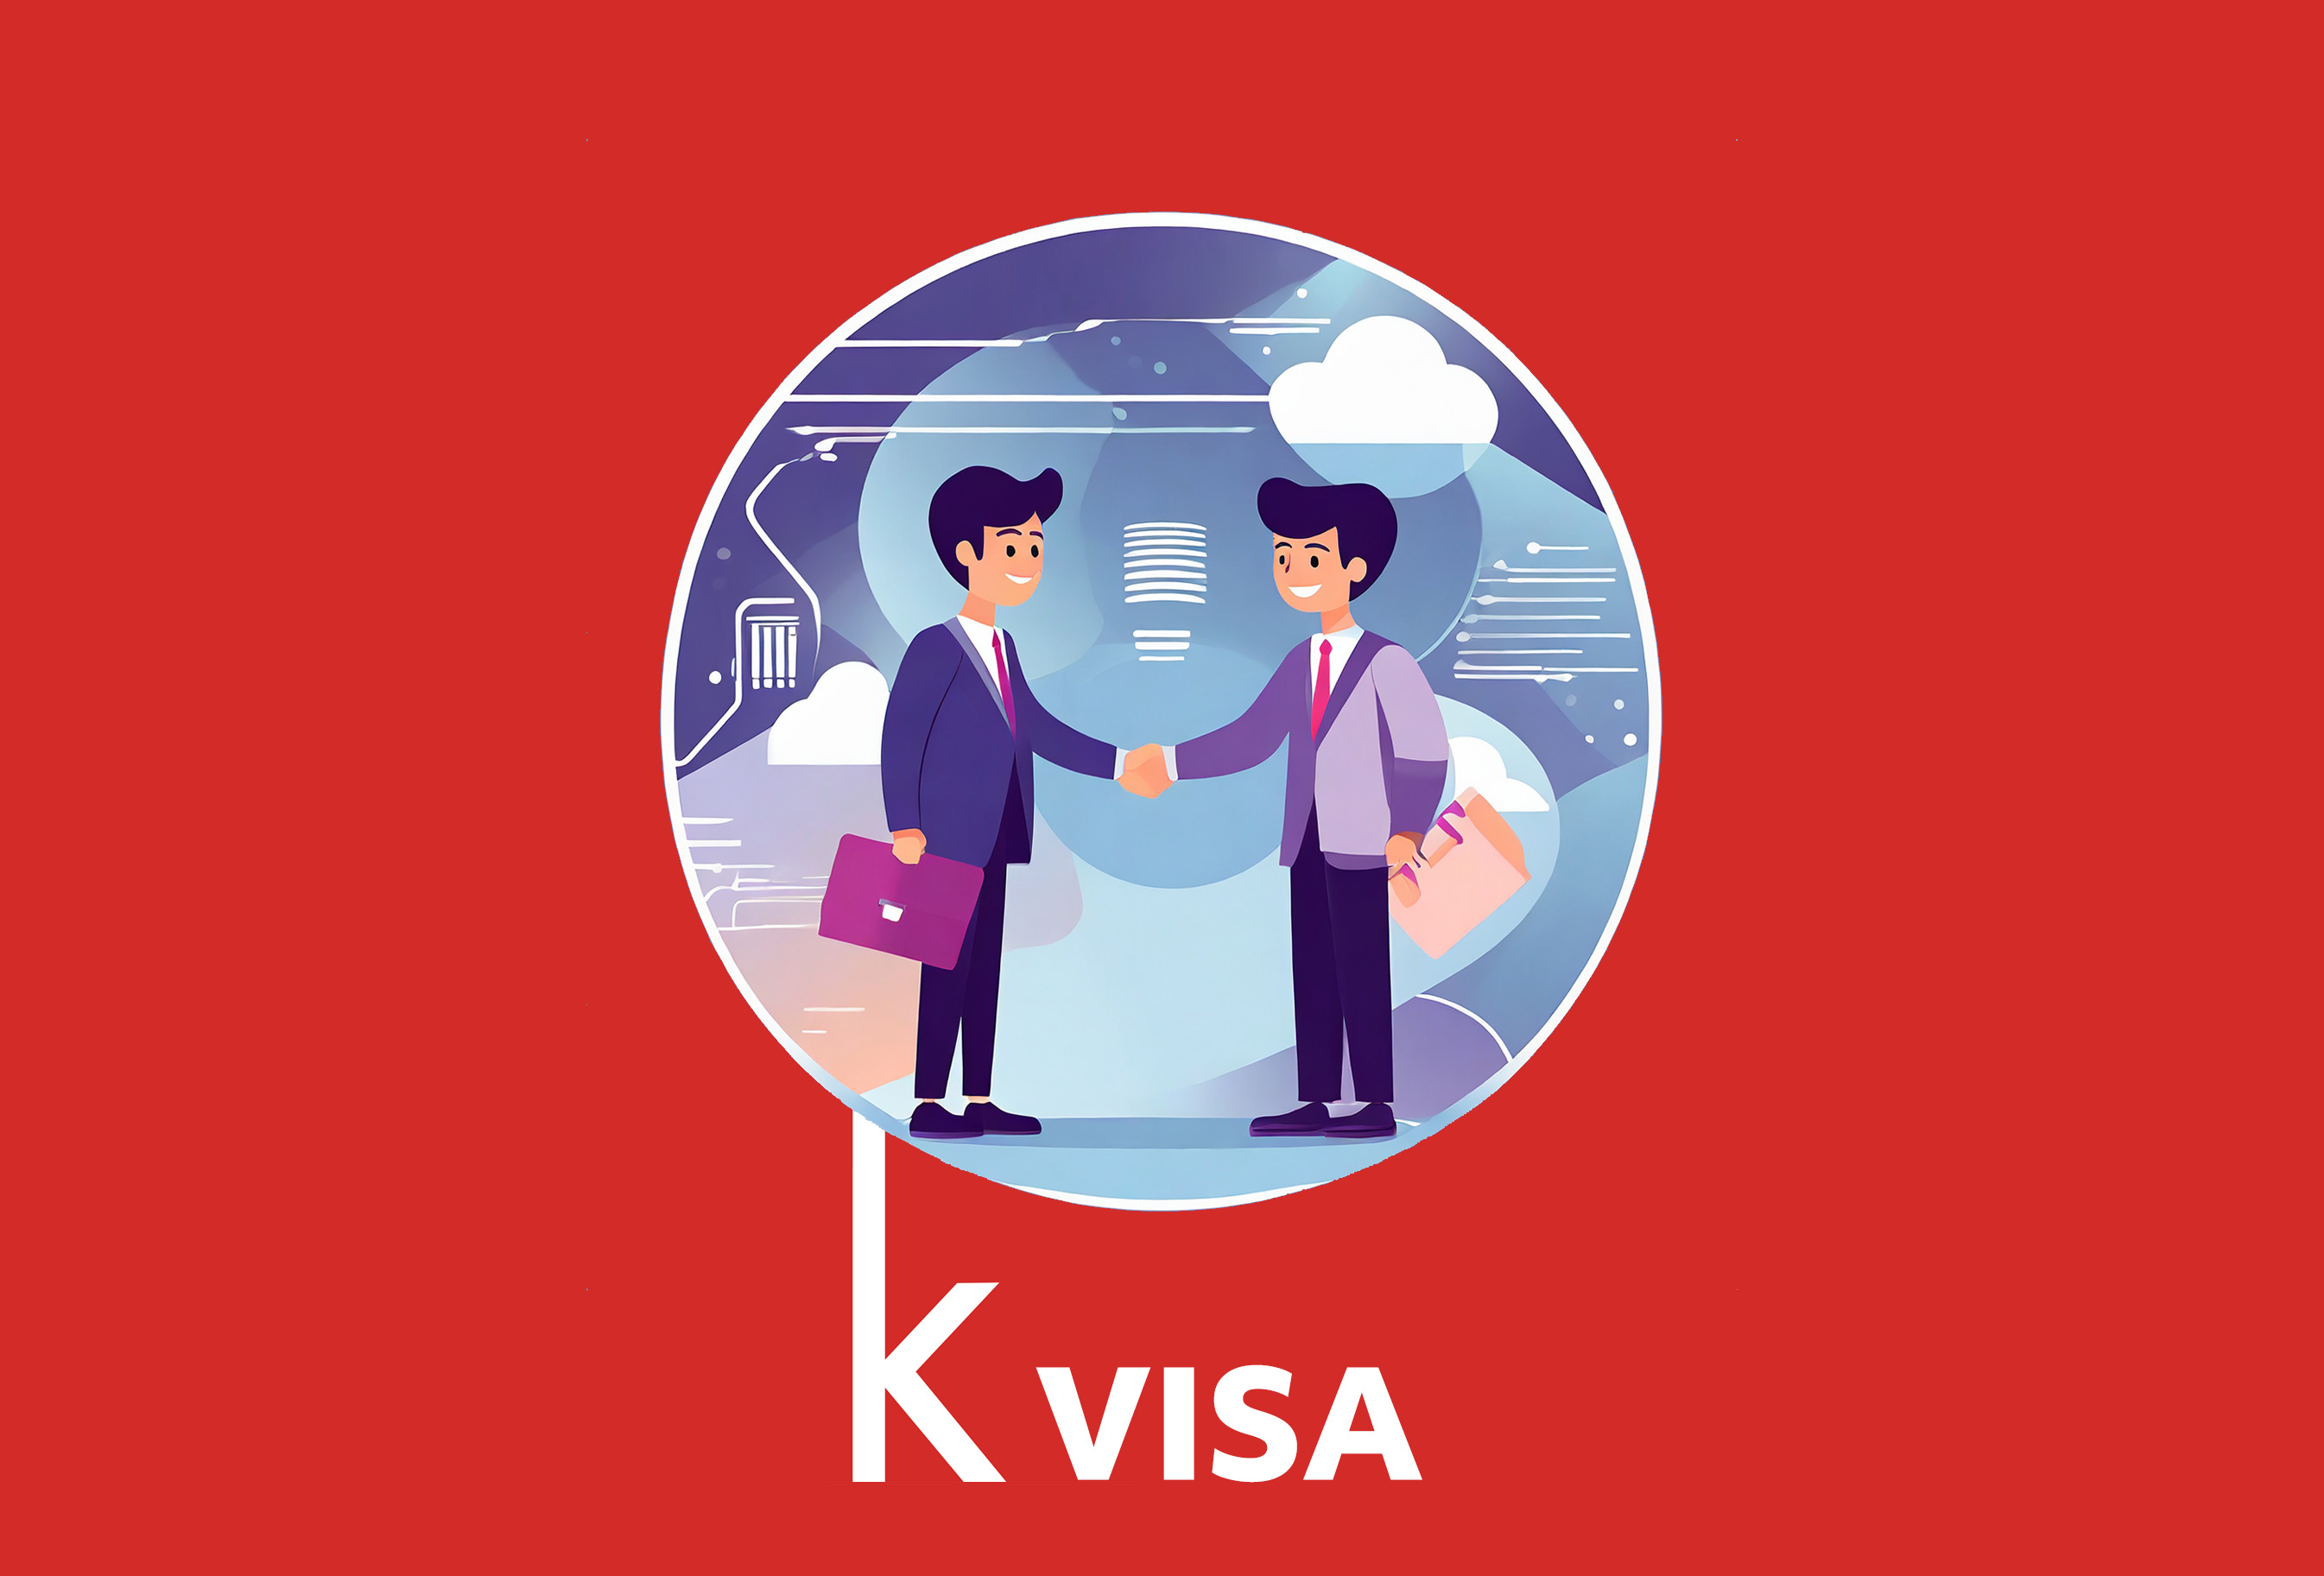 E4 Visa profile.jpg